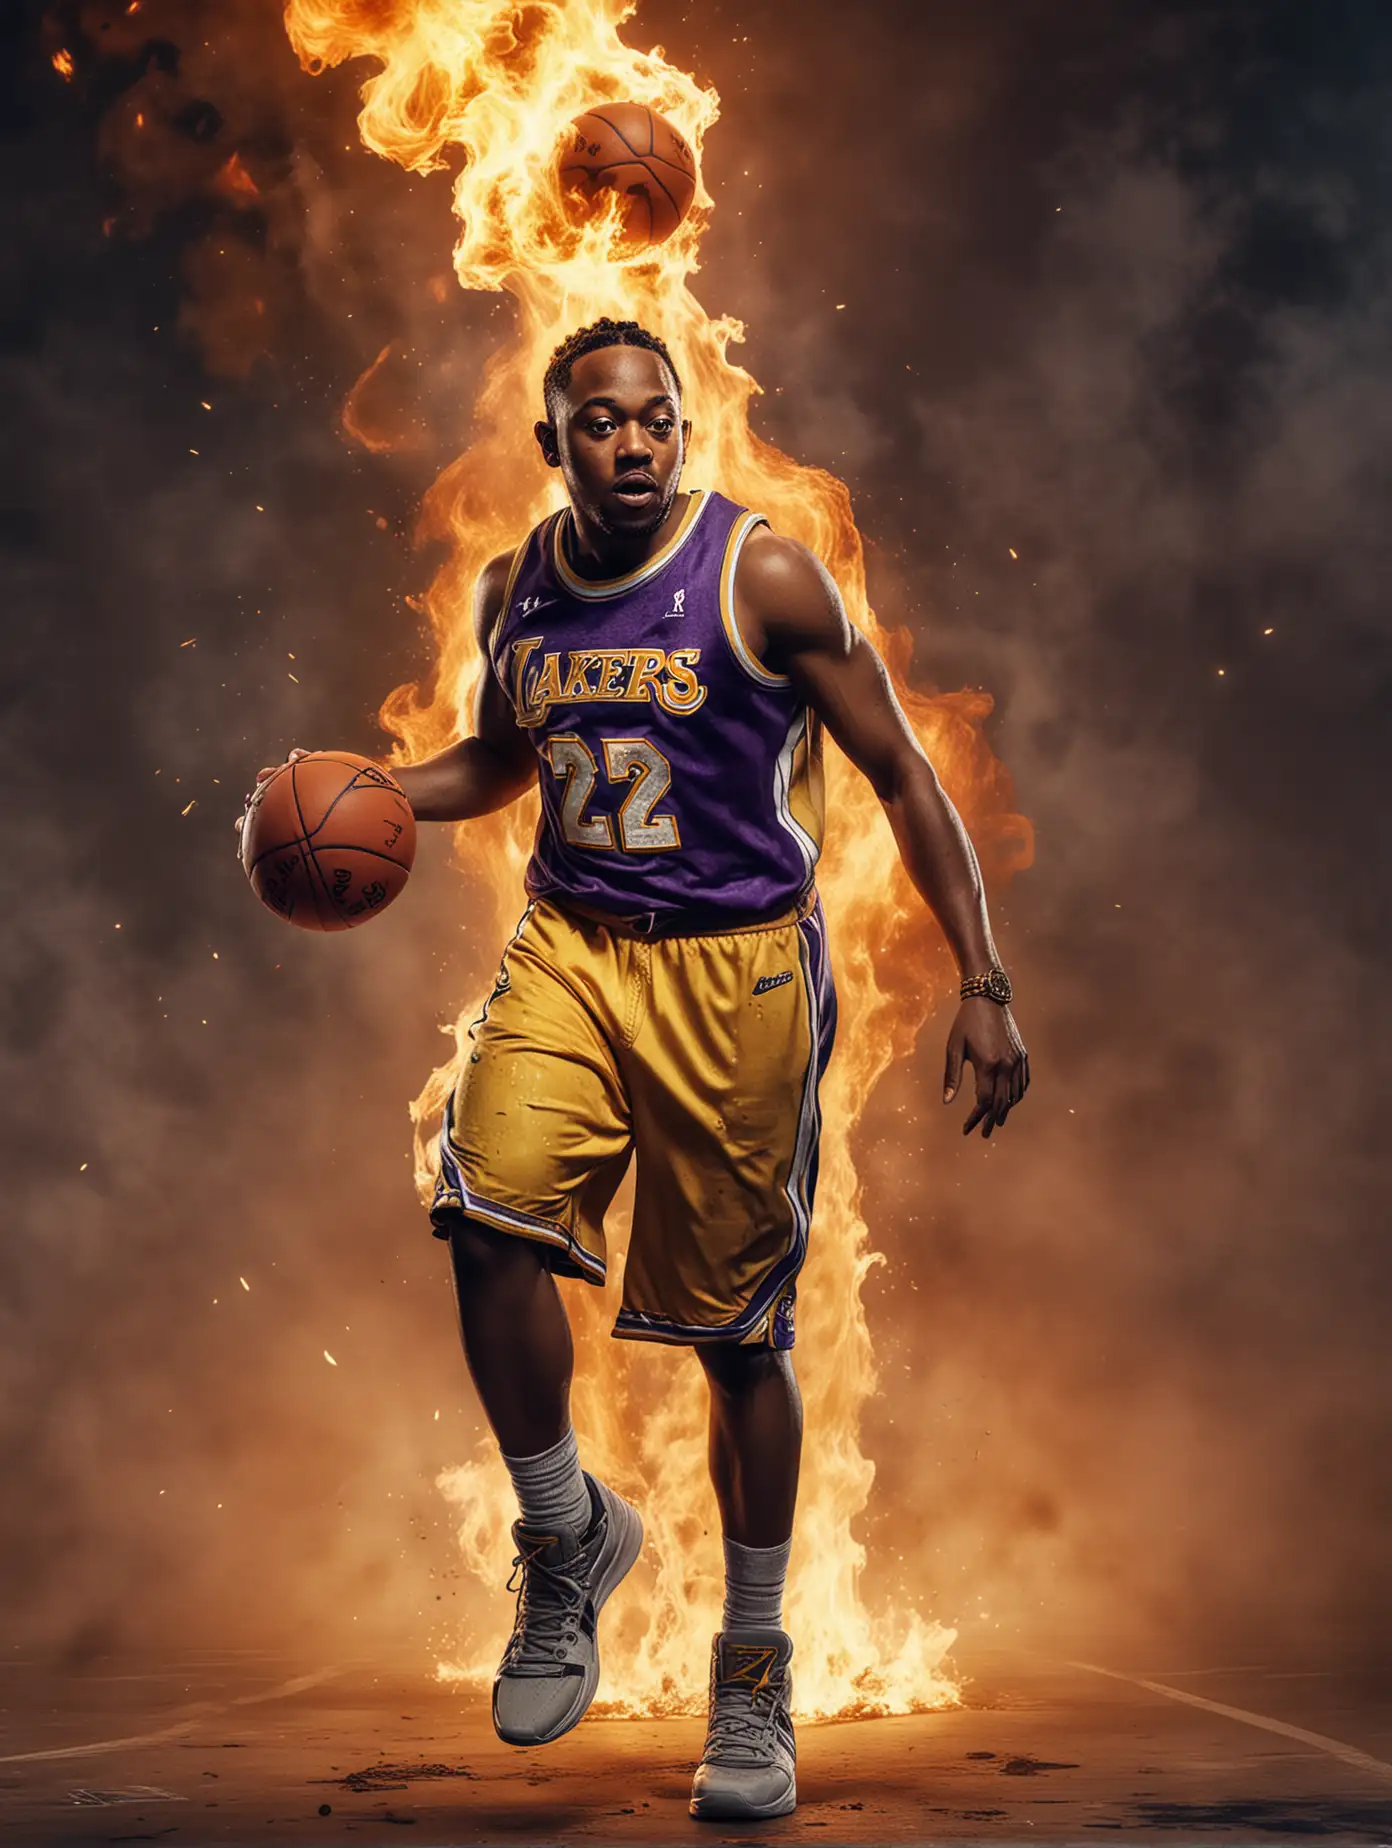 Kendrick Lamar in Lakers Uniform Slam Dunking Basketball on Fire